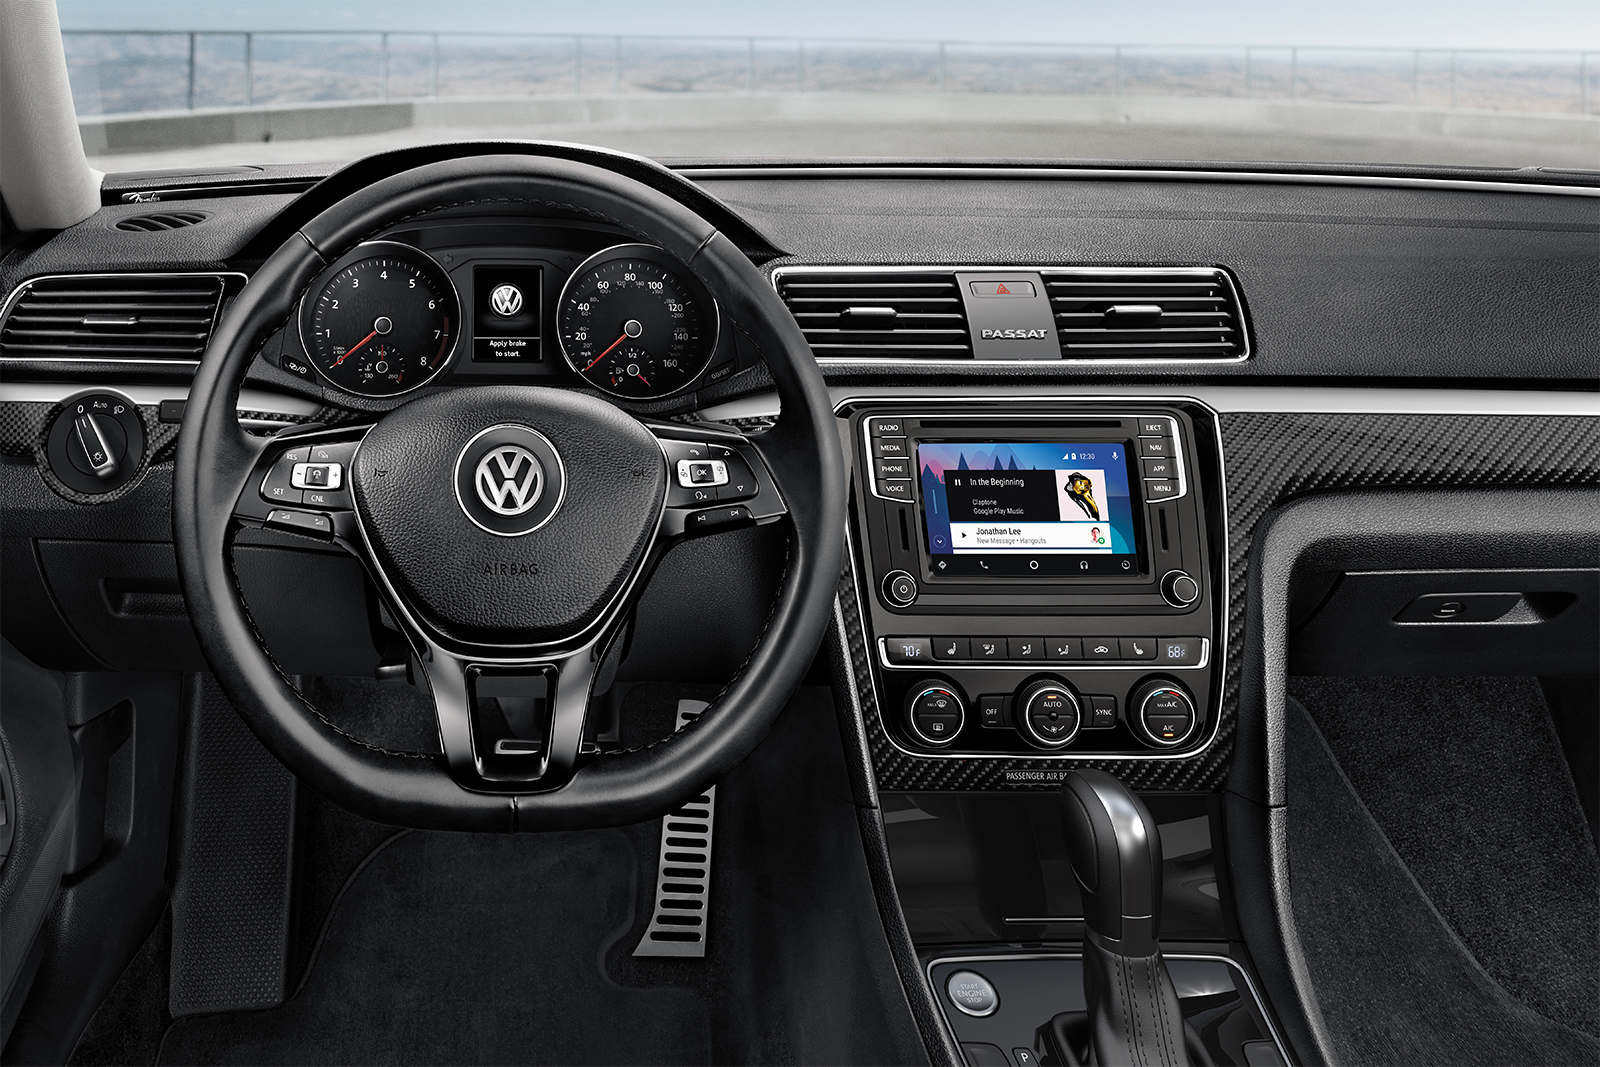 2019 Volkswagen Passat Leasing Near Washington Dc